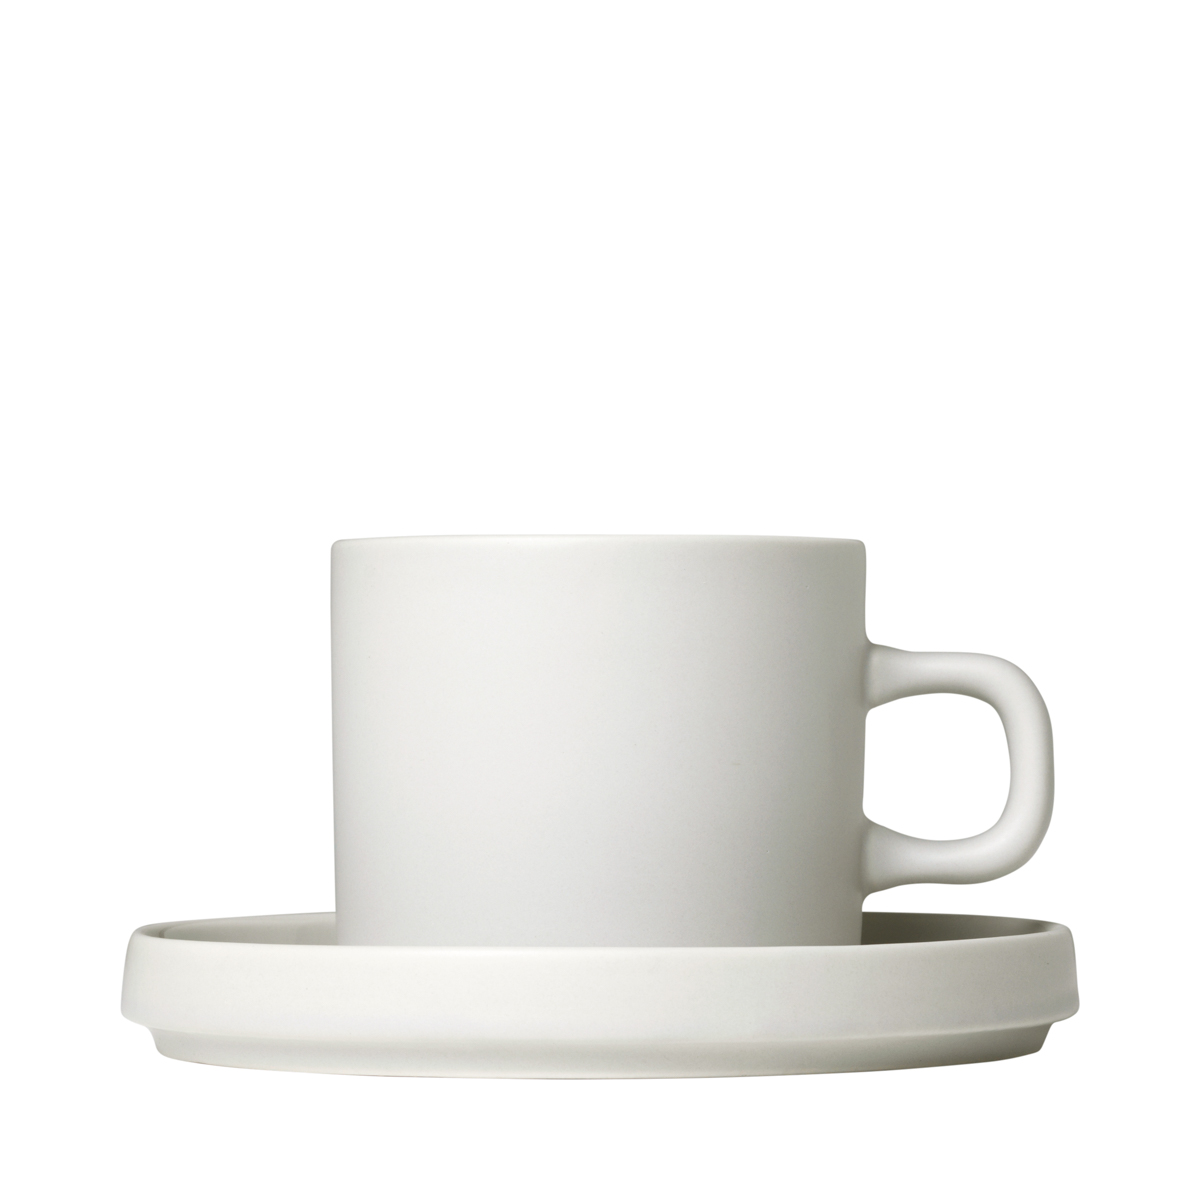 Set 2 Kaffeetassen -PILAR- Moonbeam, 200 ml, Ø 8 cm, Ø 14,5 cm. Material: Keramik. Von Blomus.